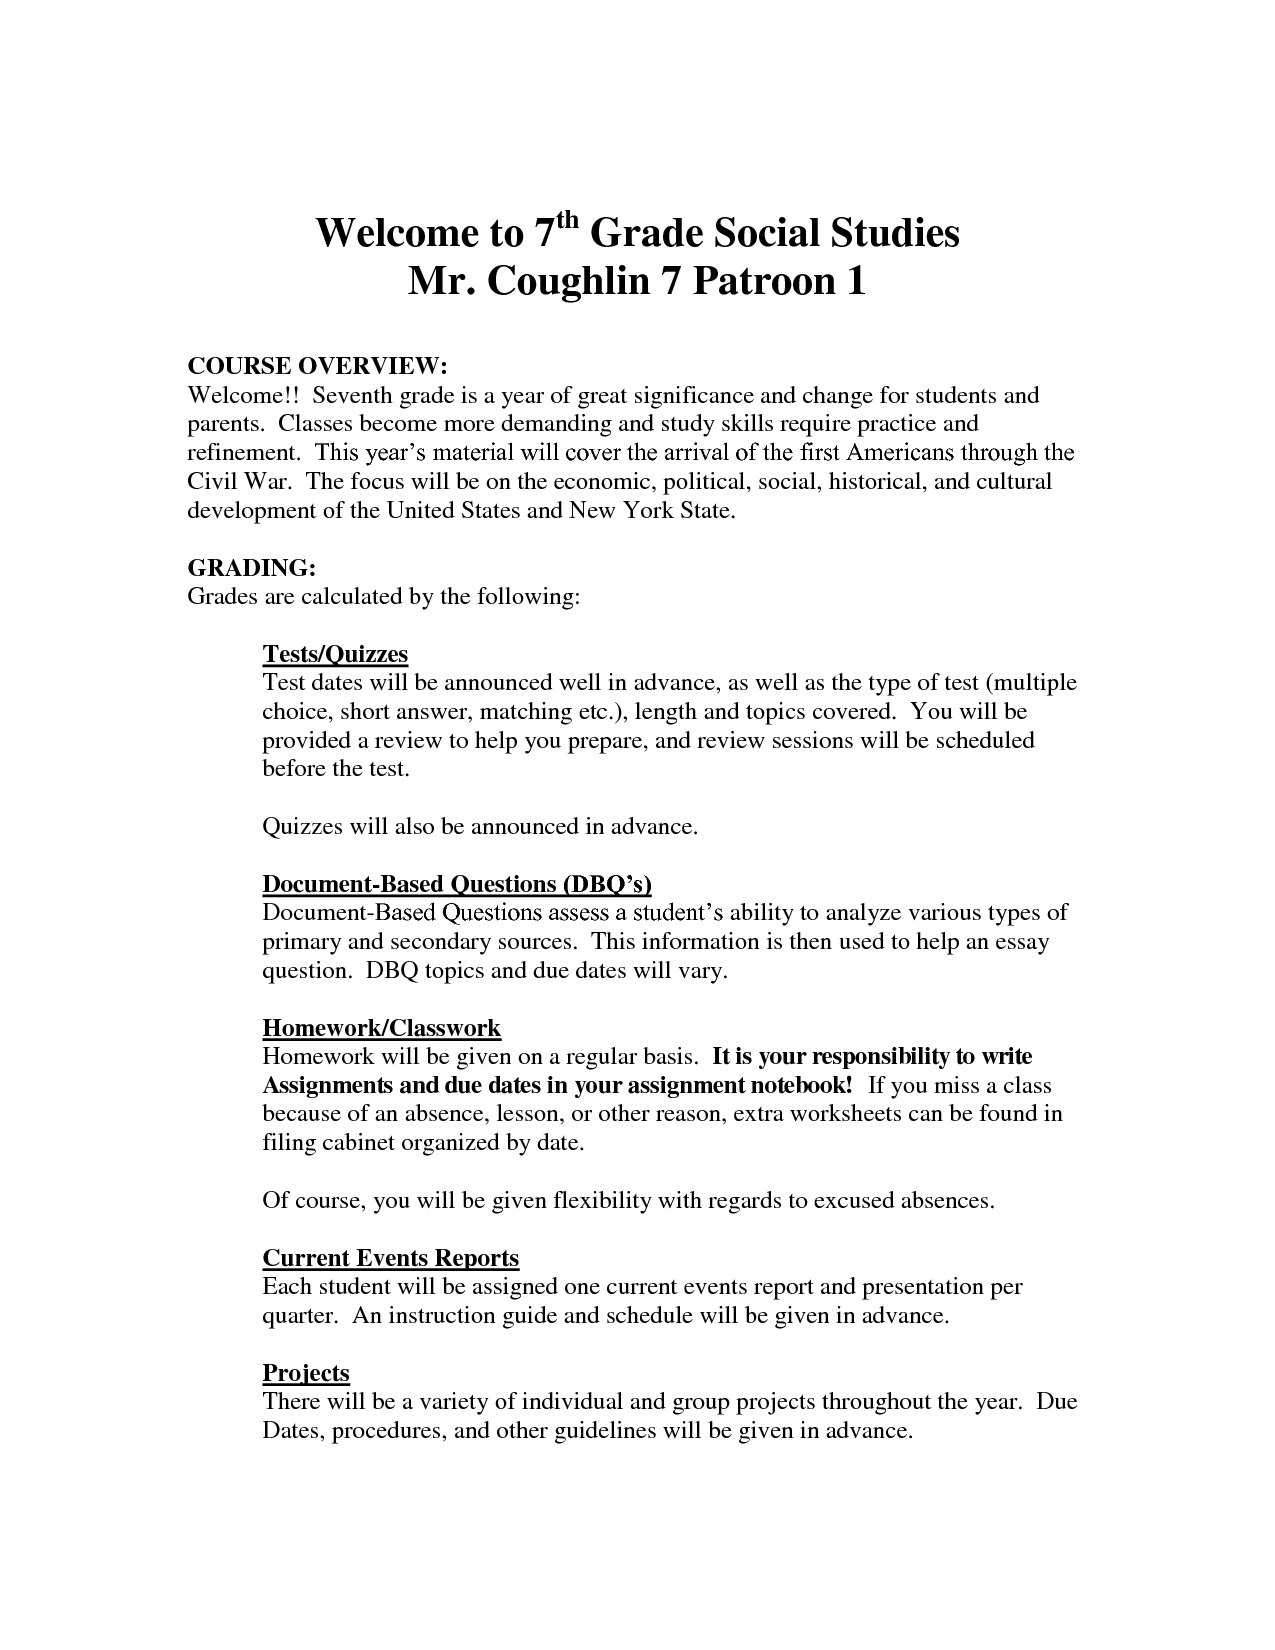 7th Grade Social Studies Worksheets Image